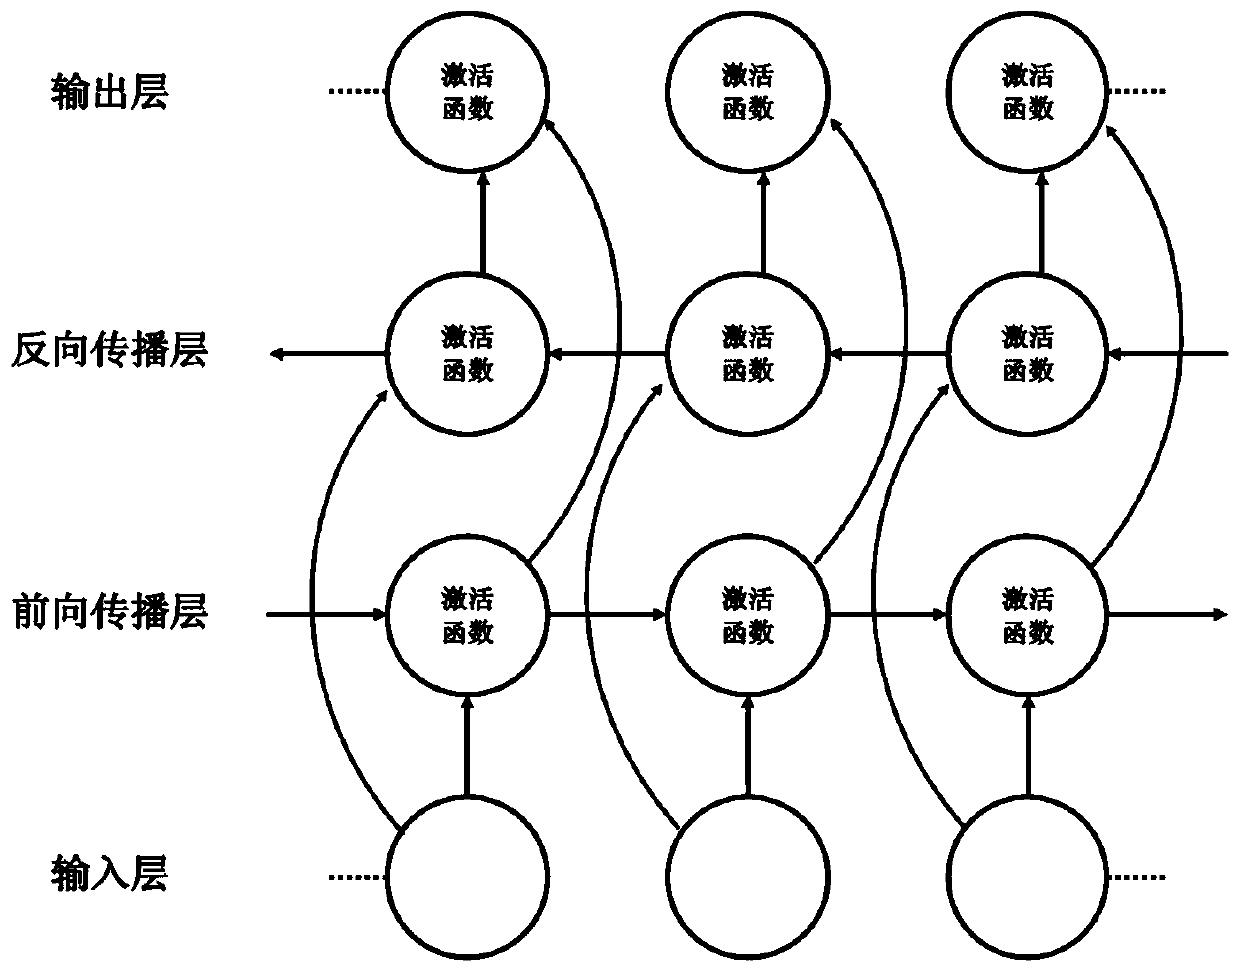 A method for gene association analysis based on deep learning algorithm